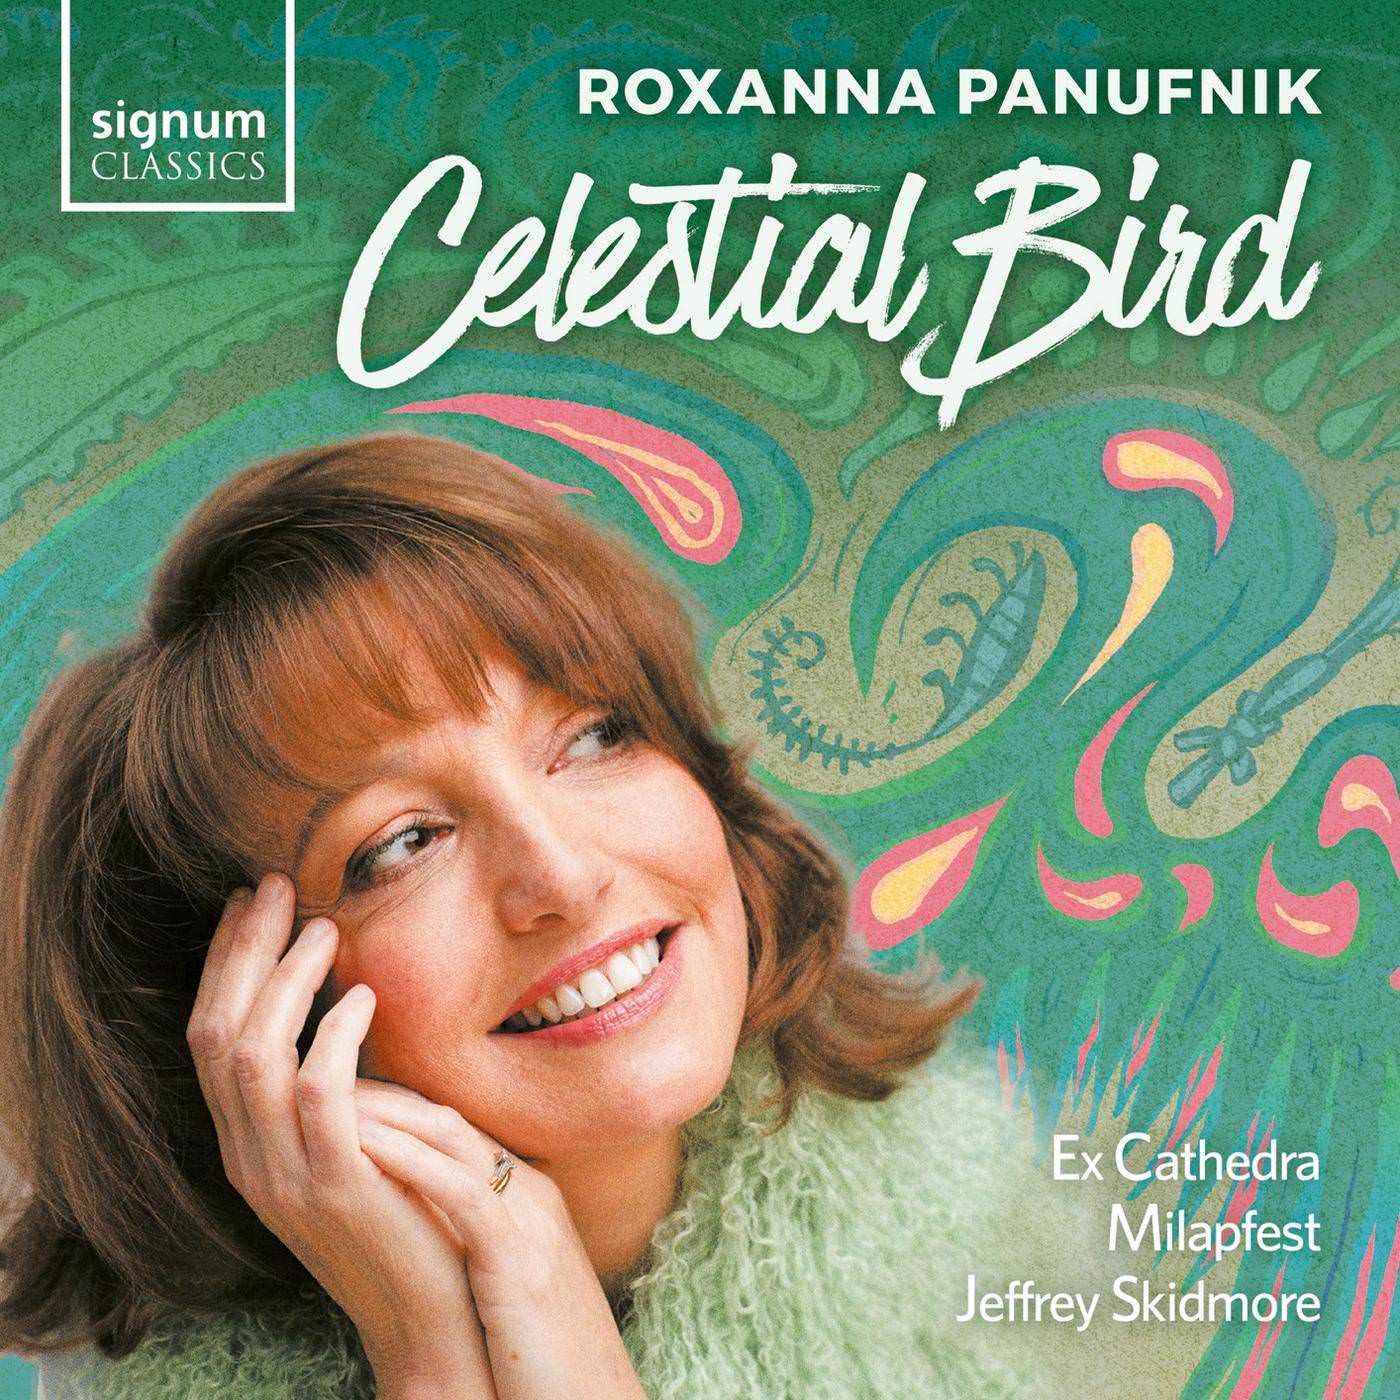 Ex Cathedra Choir & Jeffrey Skidmore - Roxanna Panufnik: Celestial Bird (2018) [FLAC 24bit/96kHz]